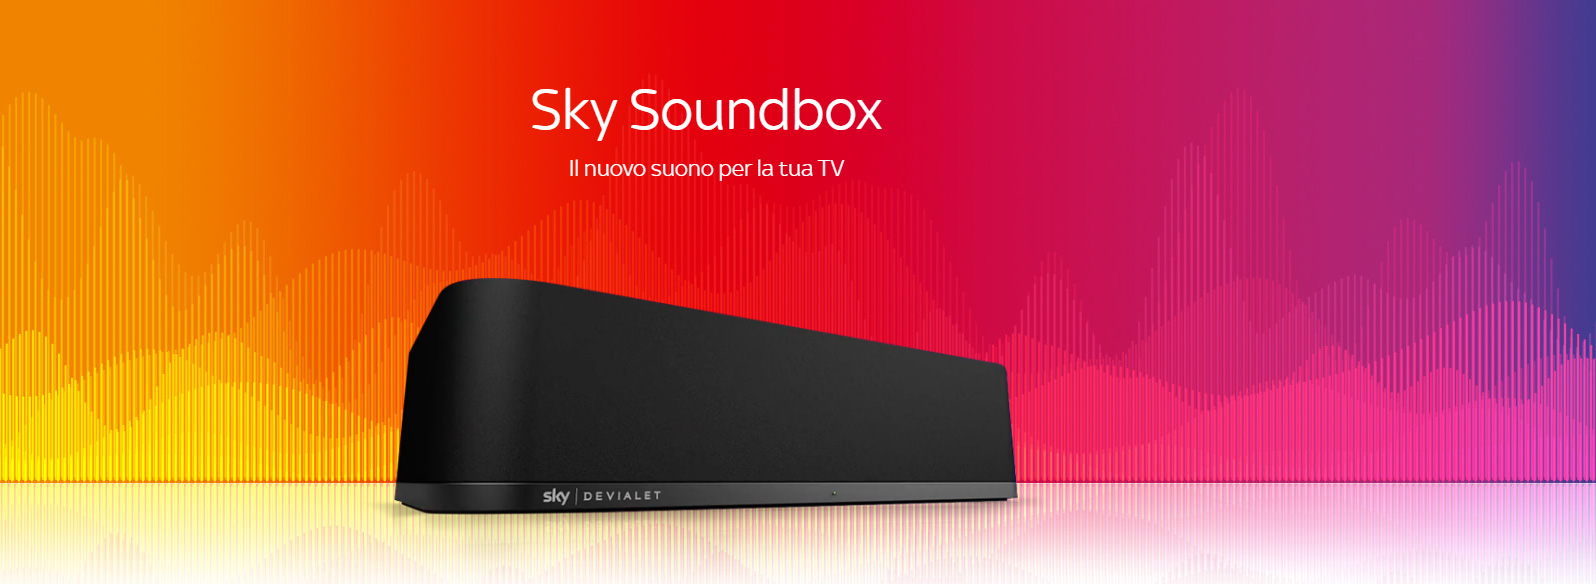 Sky Soundbox